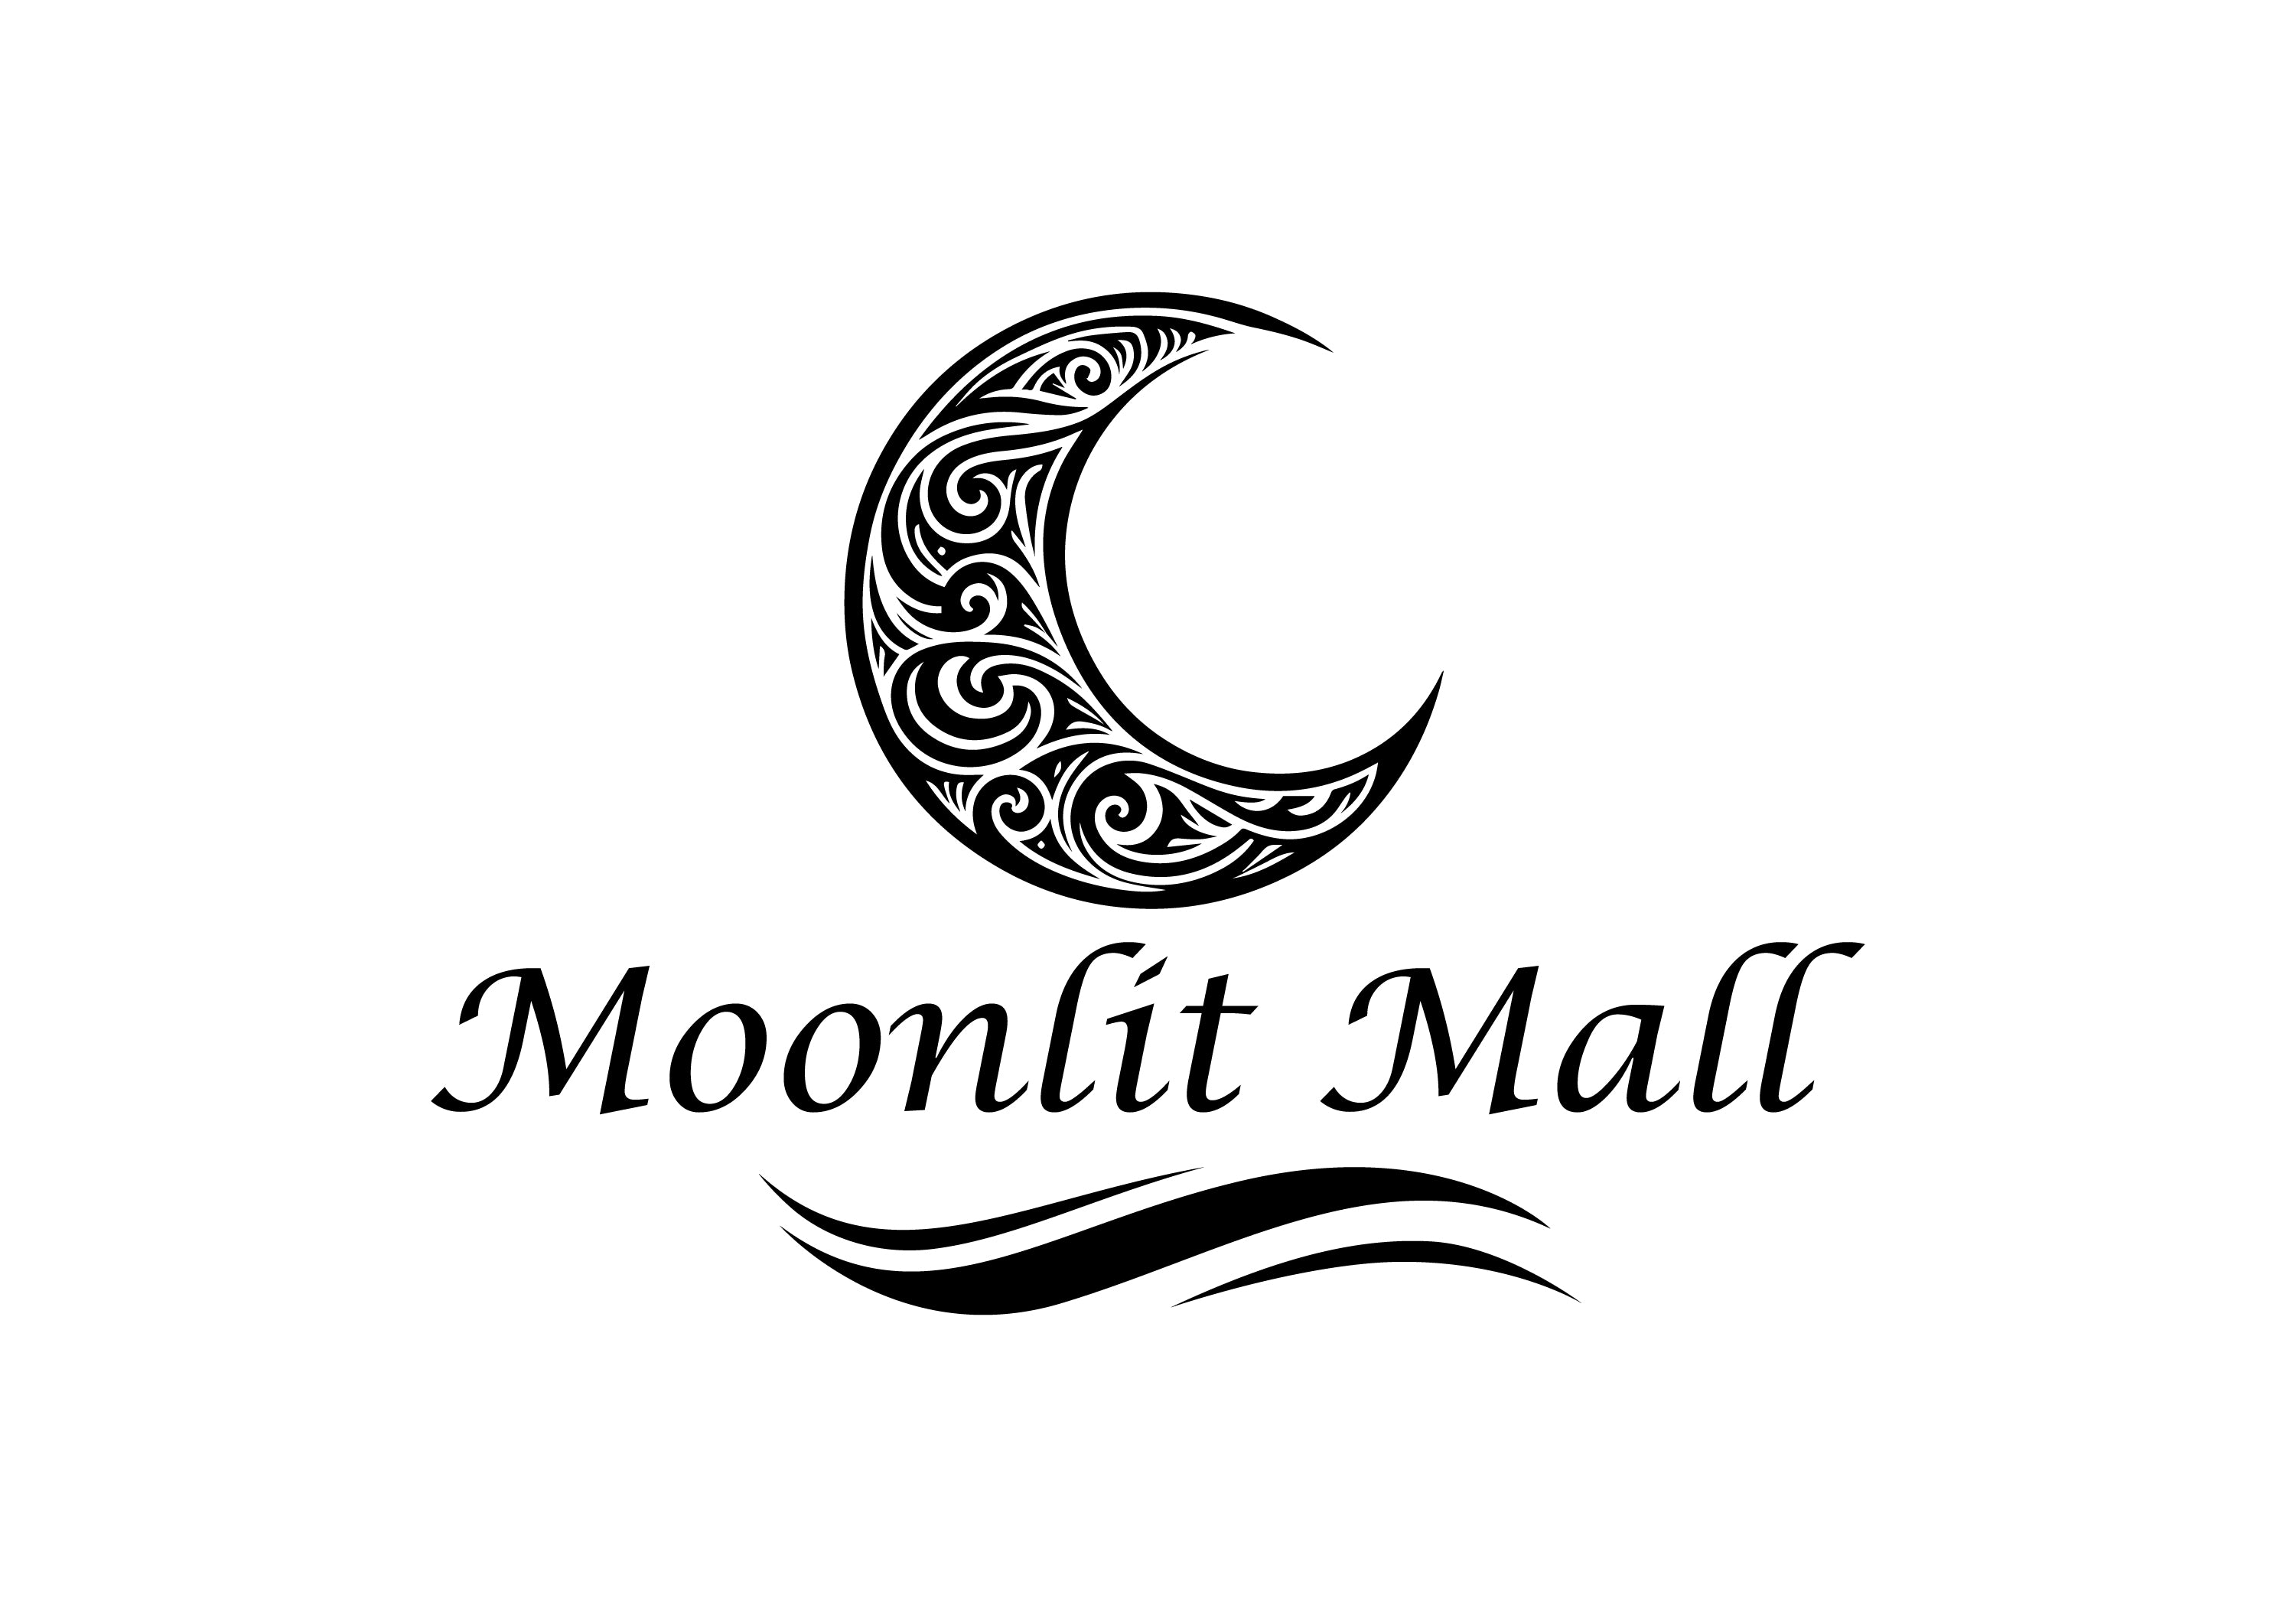 Moonlit Mall